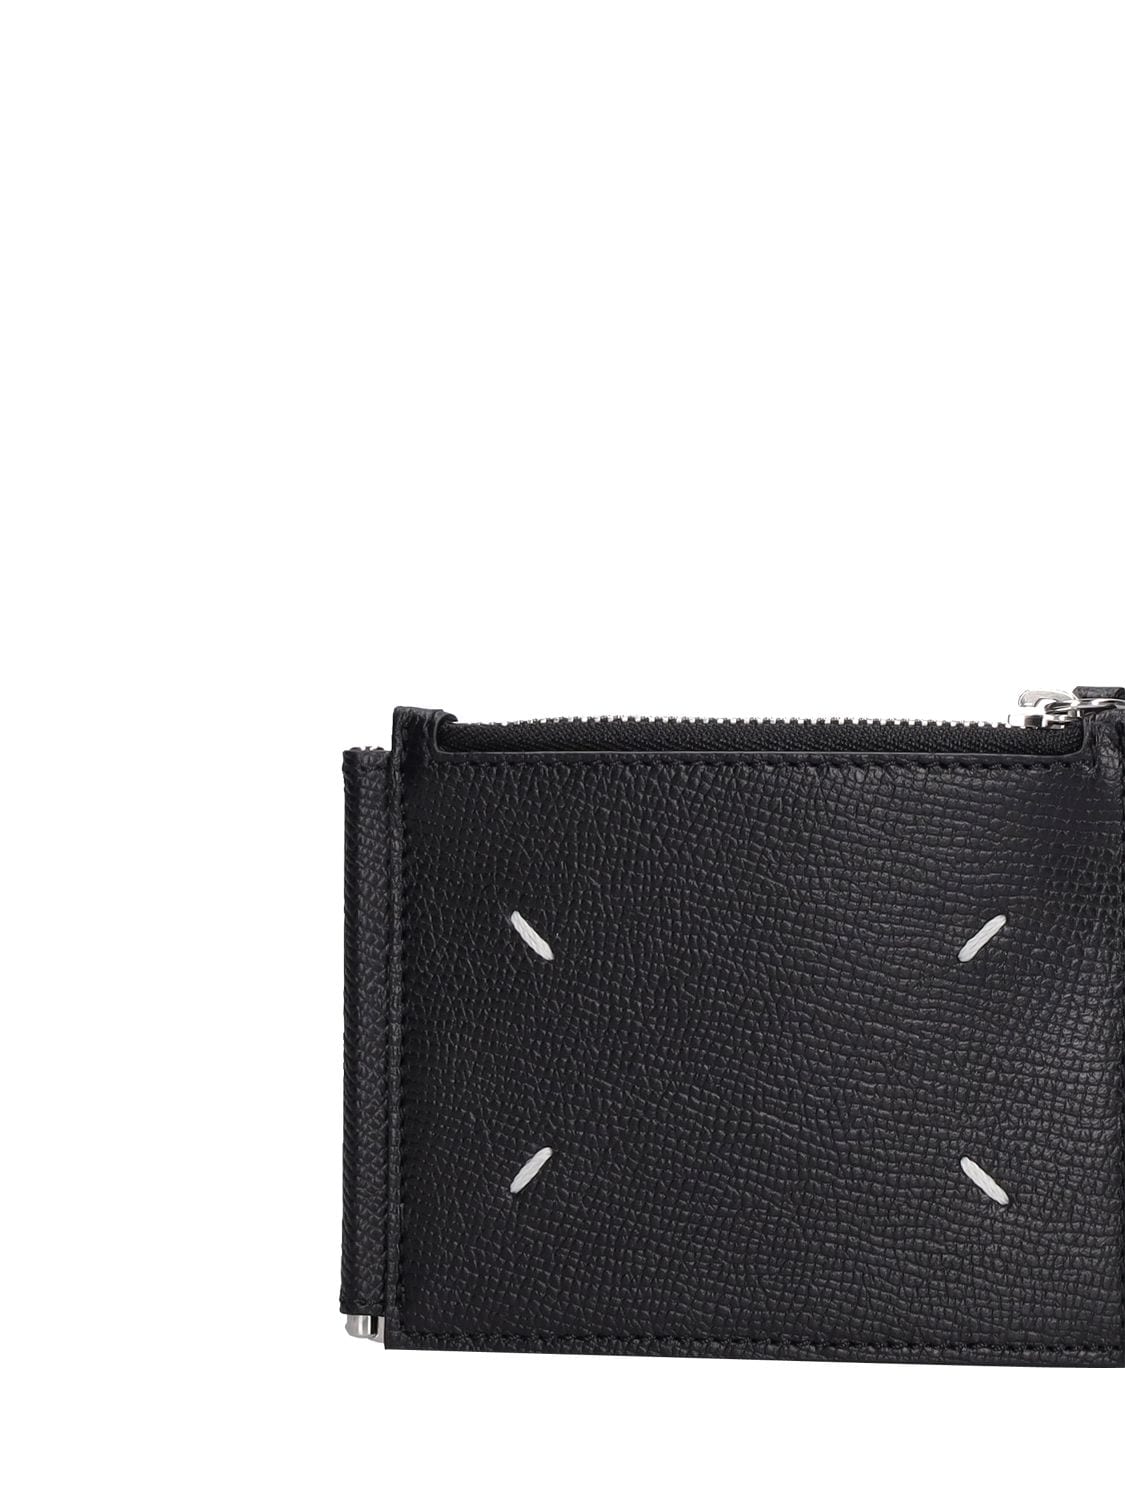 Shop Maison Margiela Grained Leather Wallet In Black